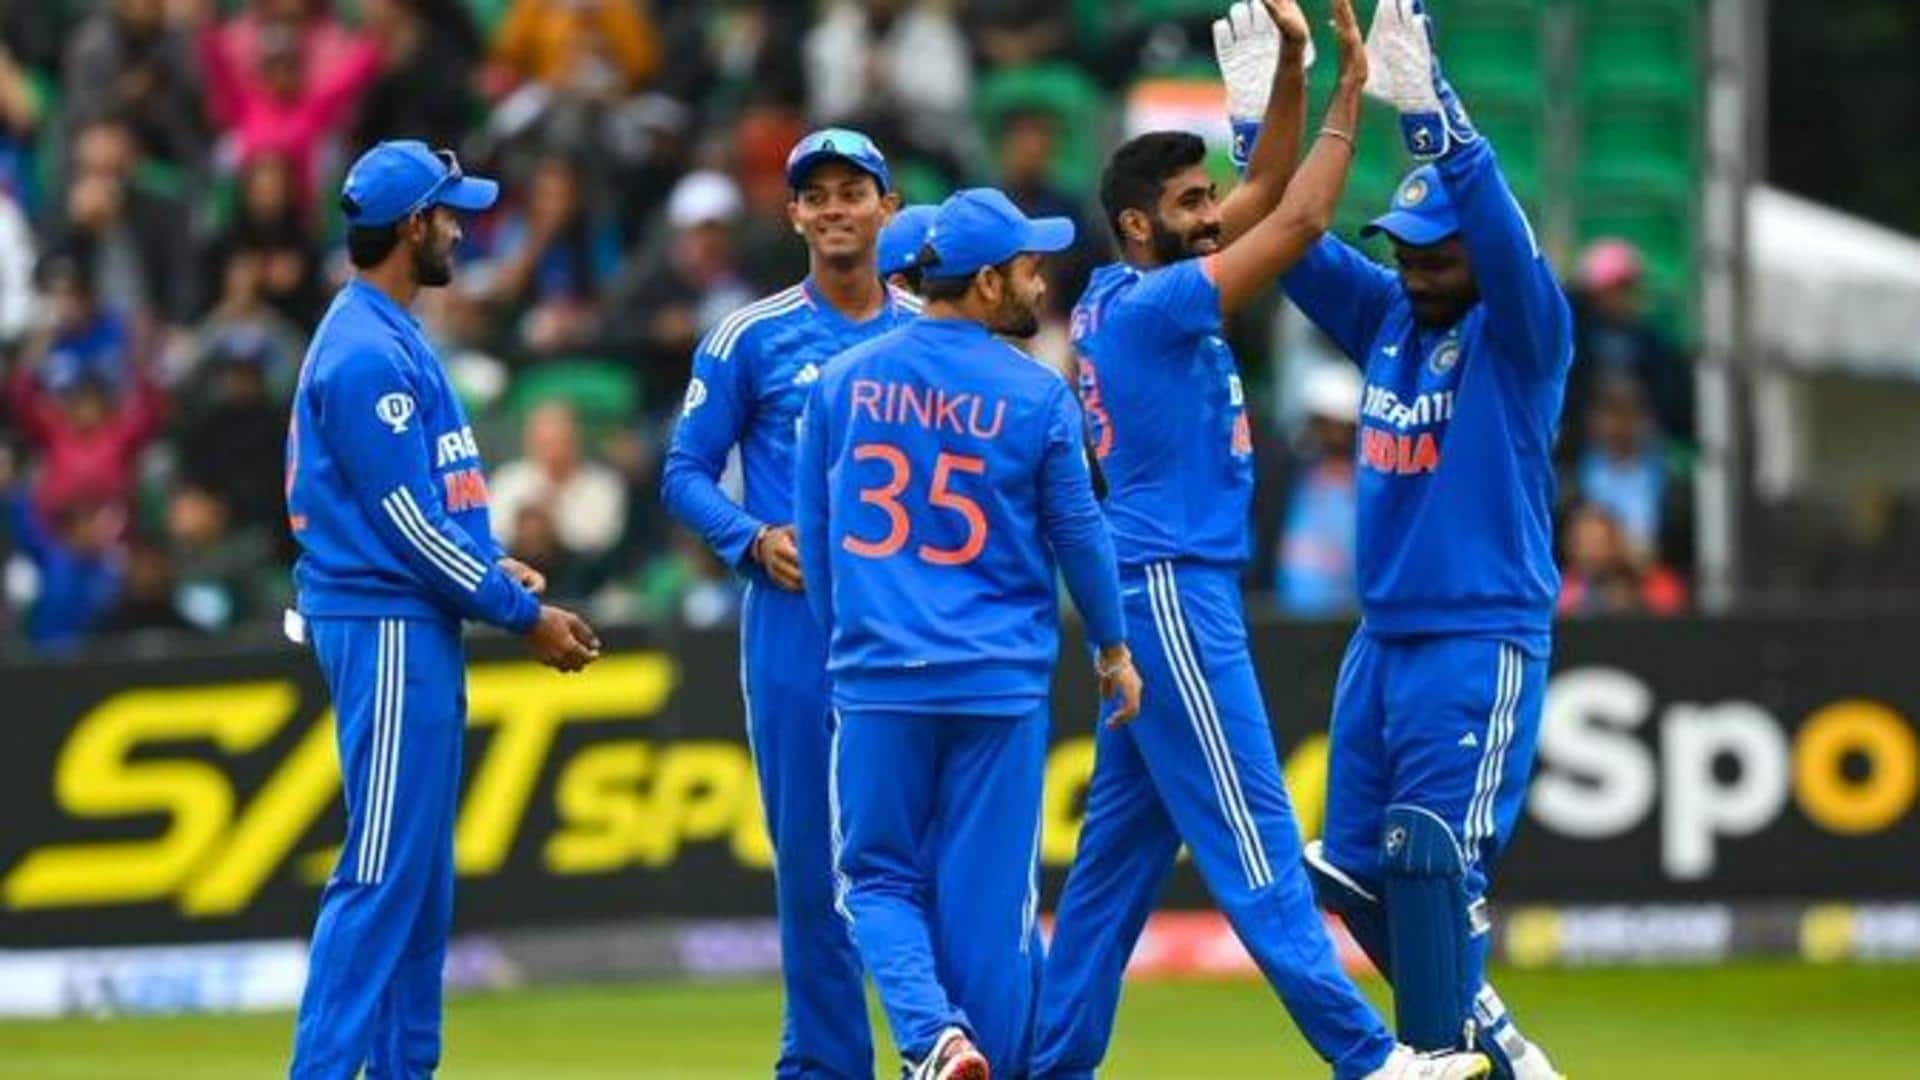 2nd T20I: India eye series win, Ireland seek redemption